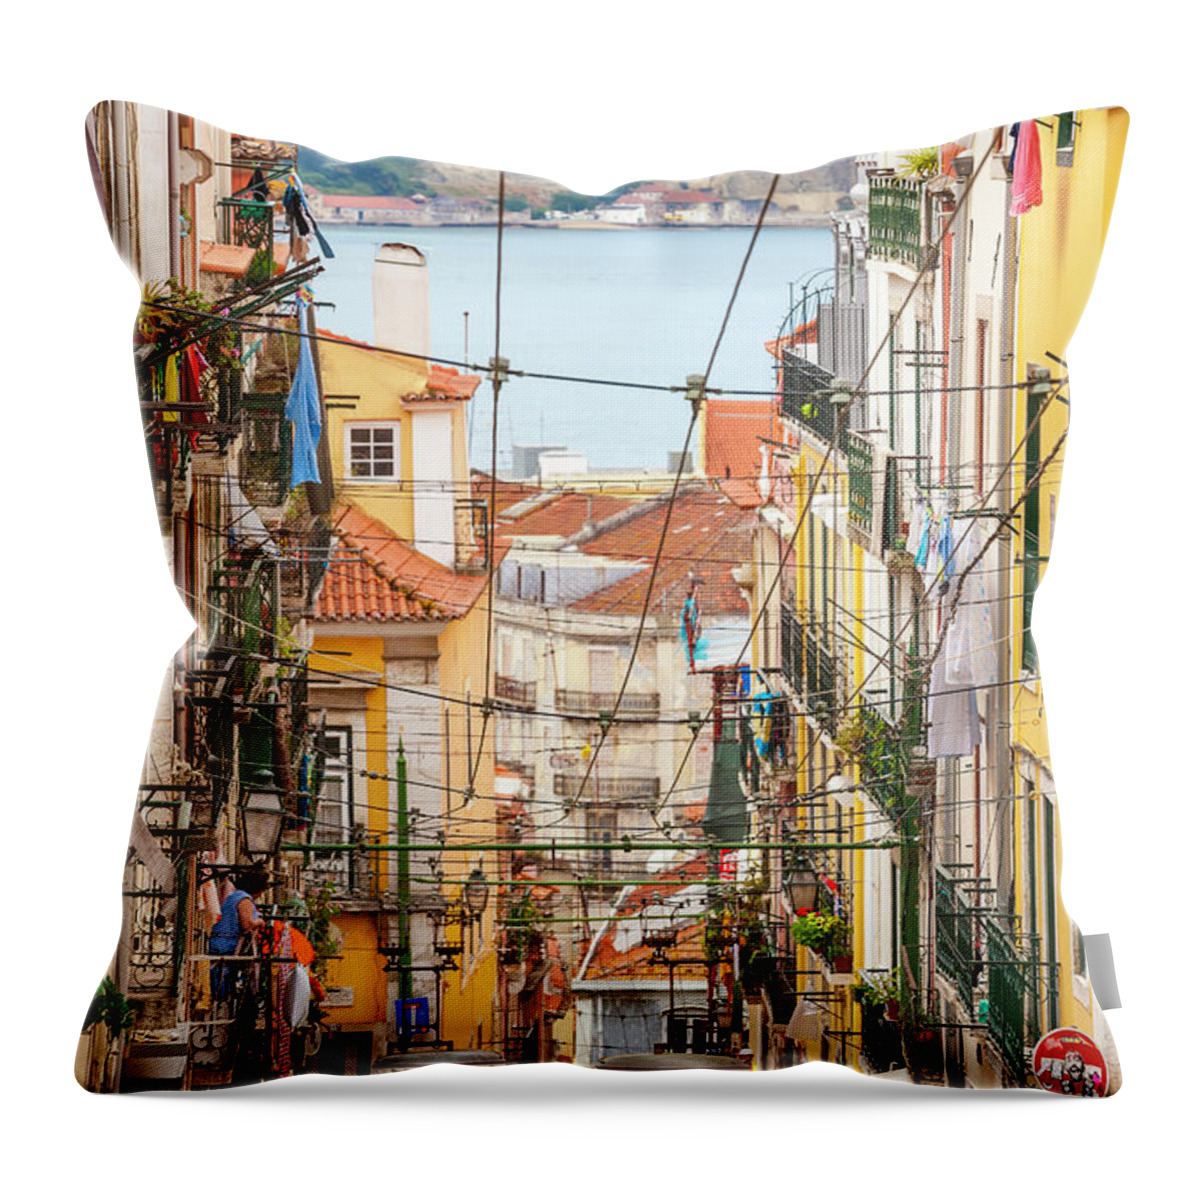 #faatoppicks Throw Pillow featuring the photograph Tram, Barrio Alto, Lisbon, Portugal by Peter Adams